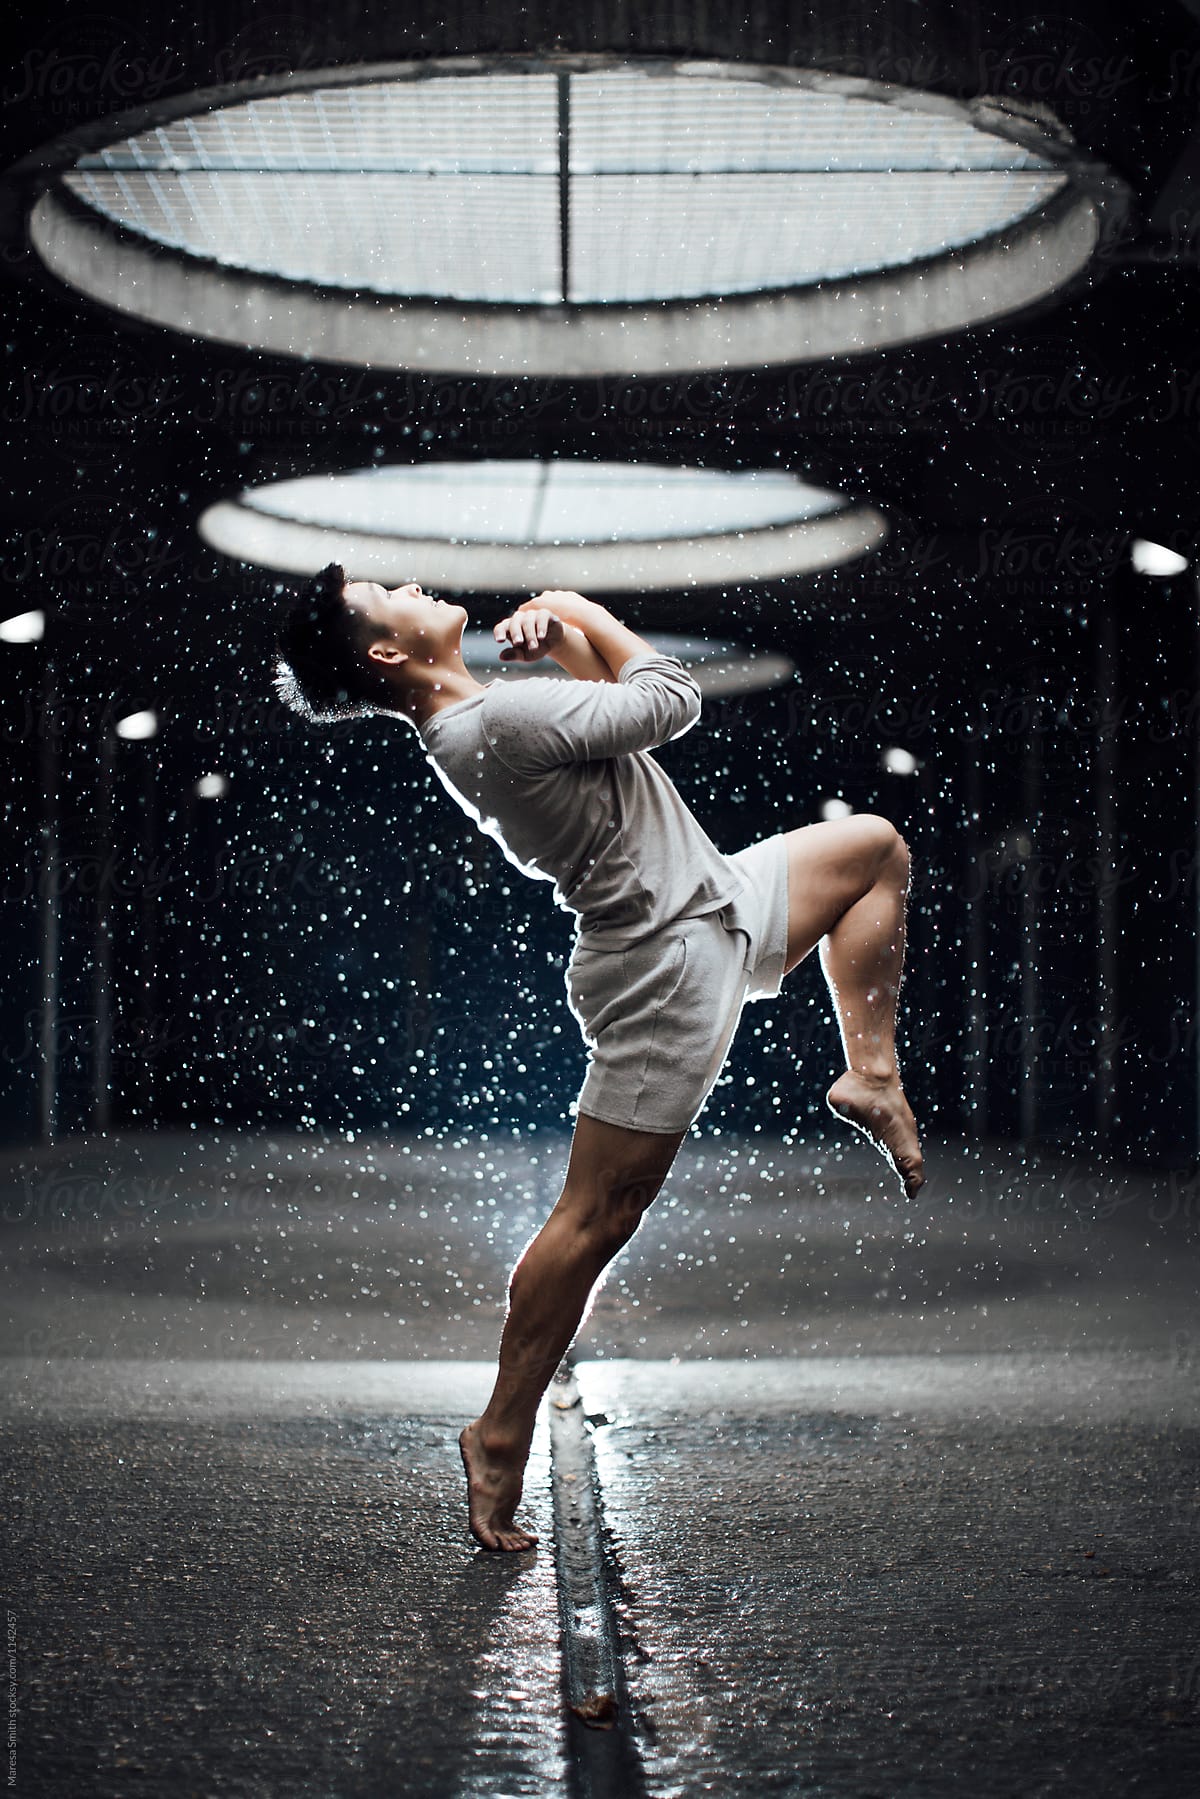 An Asian man dancing in the rain in an unusual urban setting